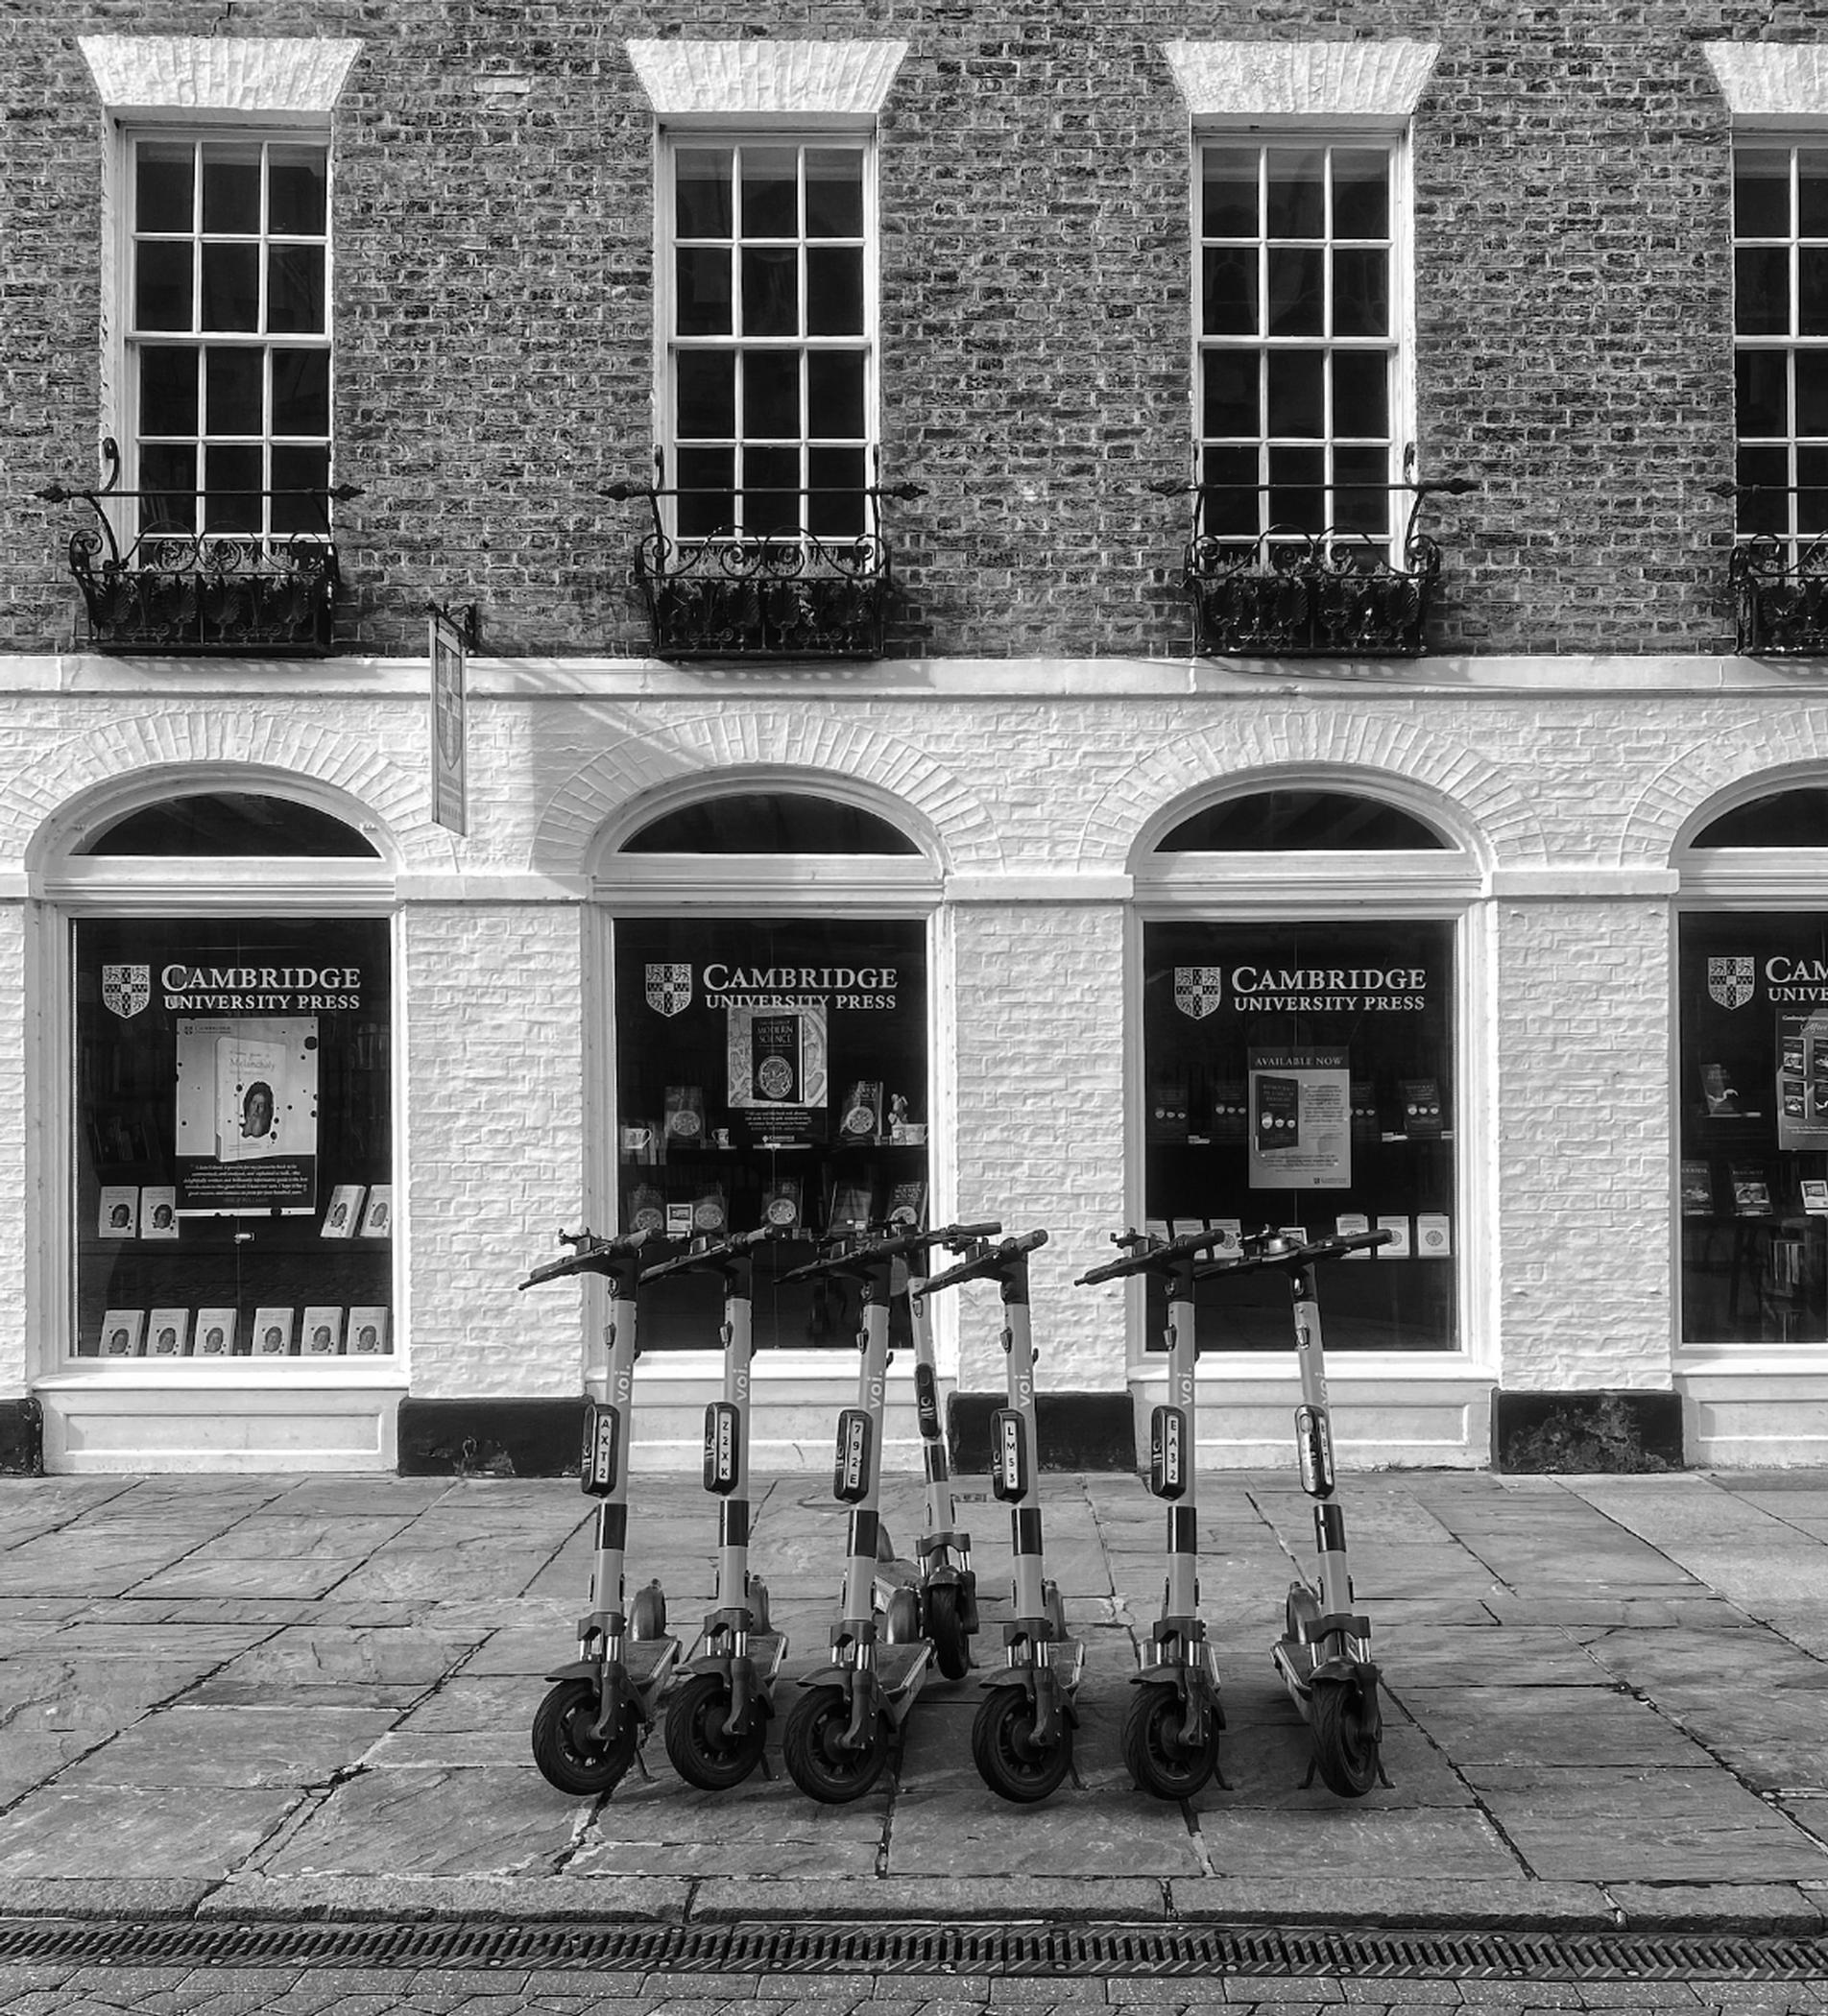 Scooters being trialled in Cambridge (Naveet Gidda/Unsplash)